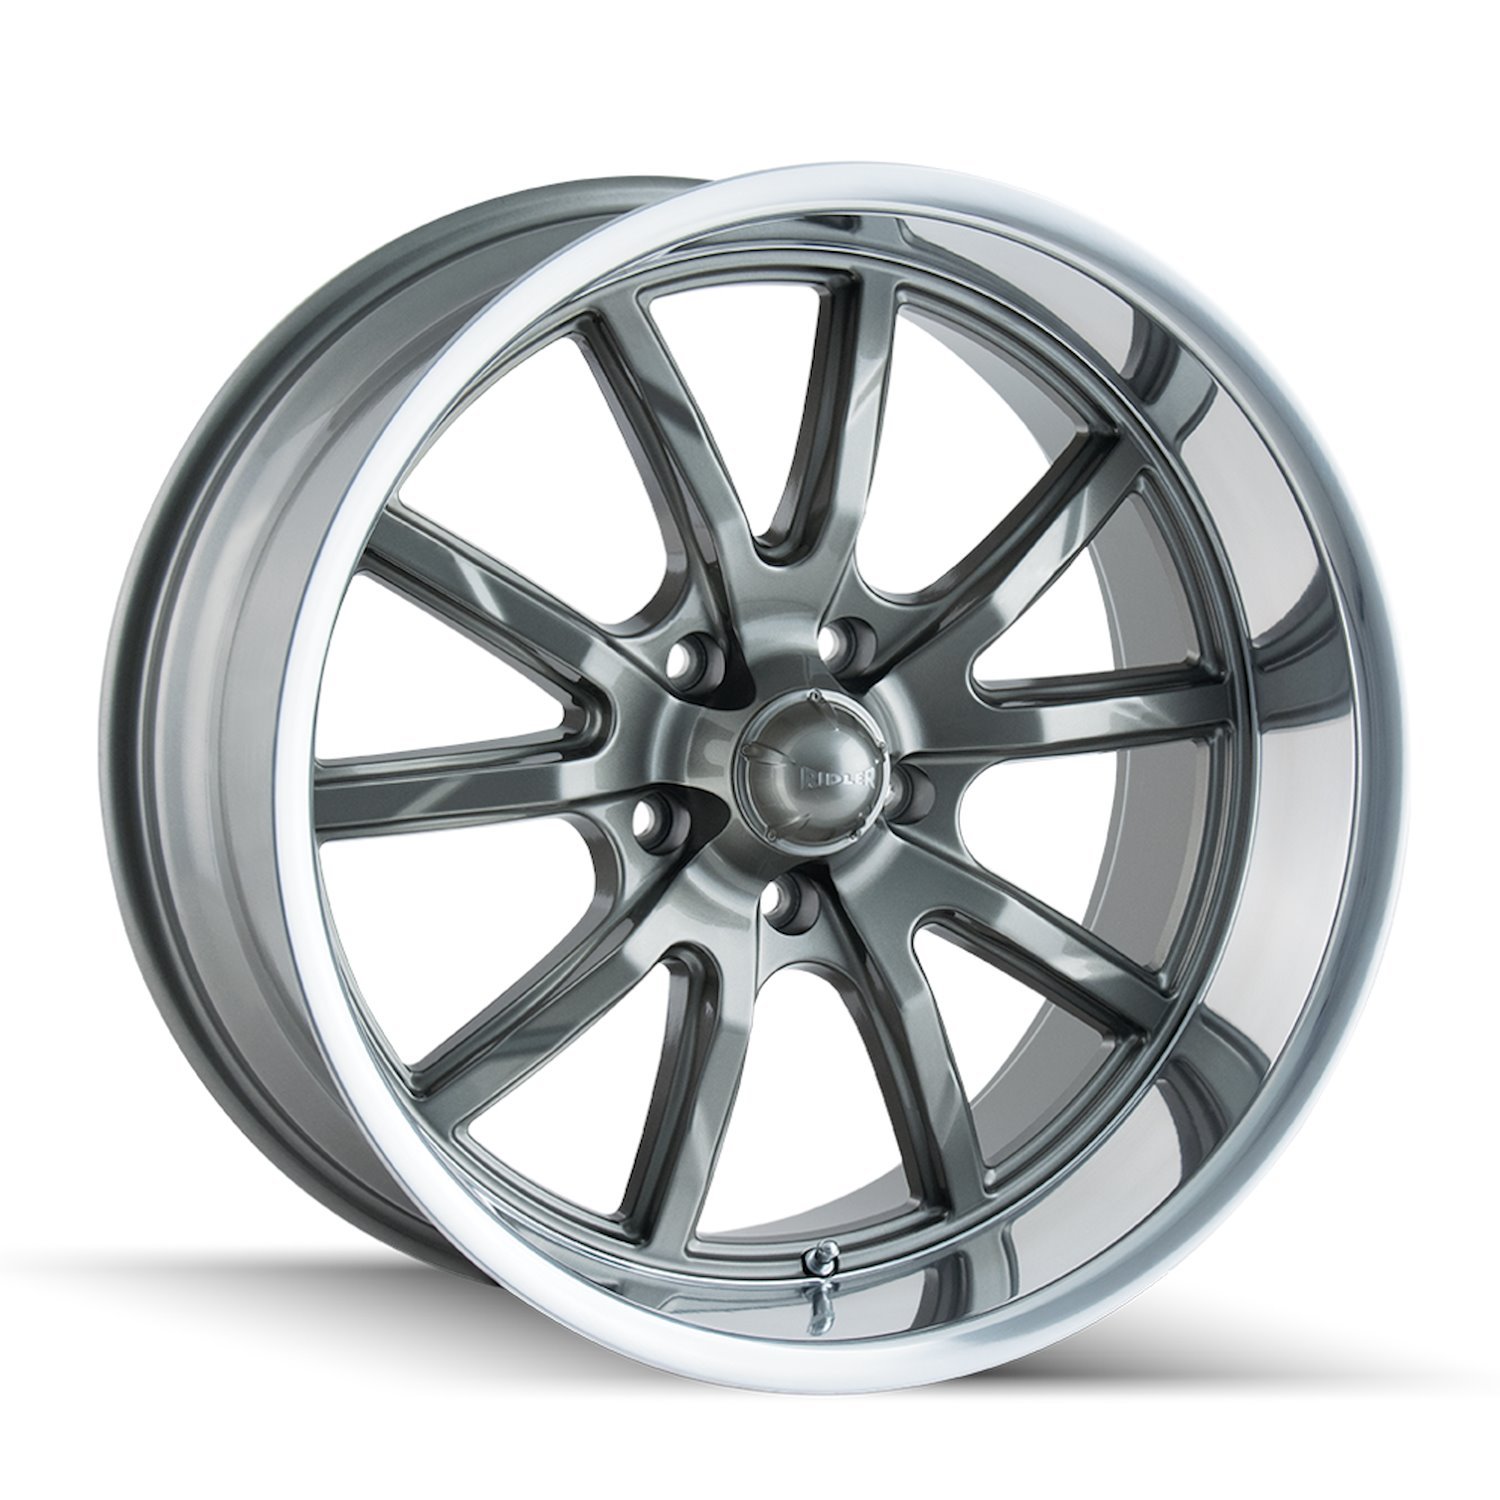 650-2865G30 650-Series Wheel [Size: 20" x 8.50"] Gloss Grey Polished Finish